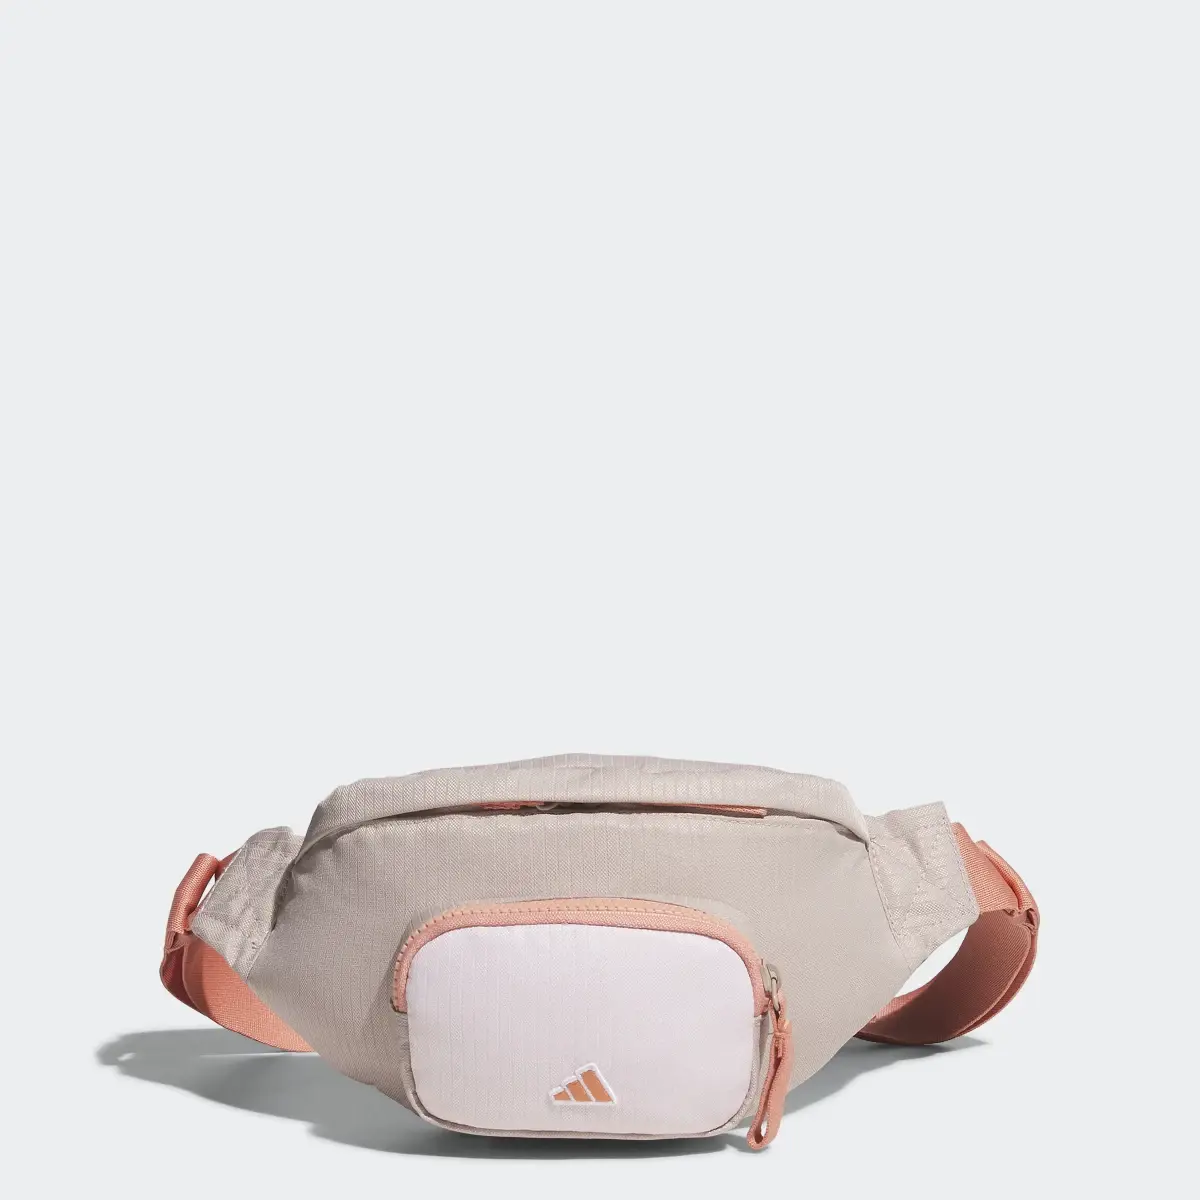 Adidas Waist Bag. 1